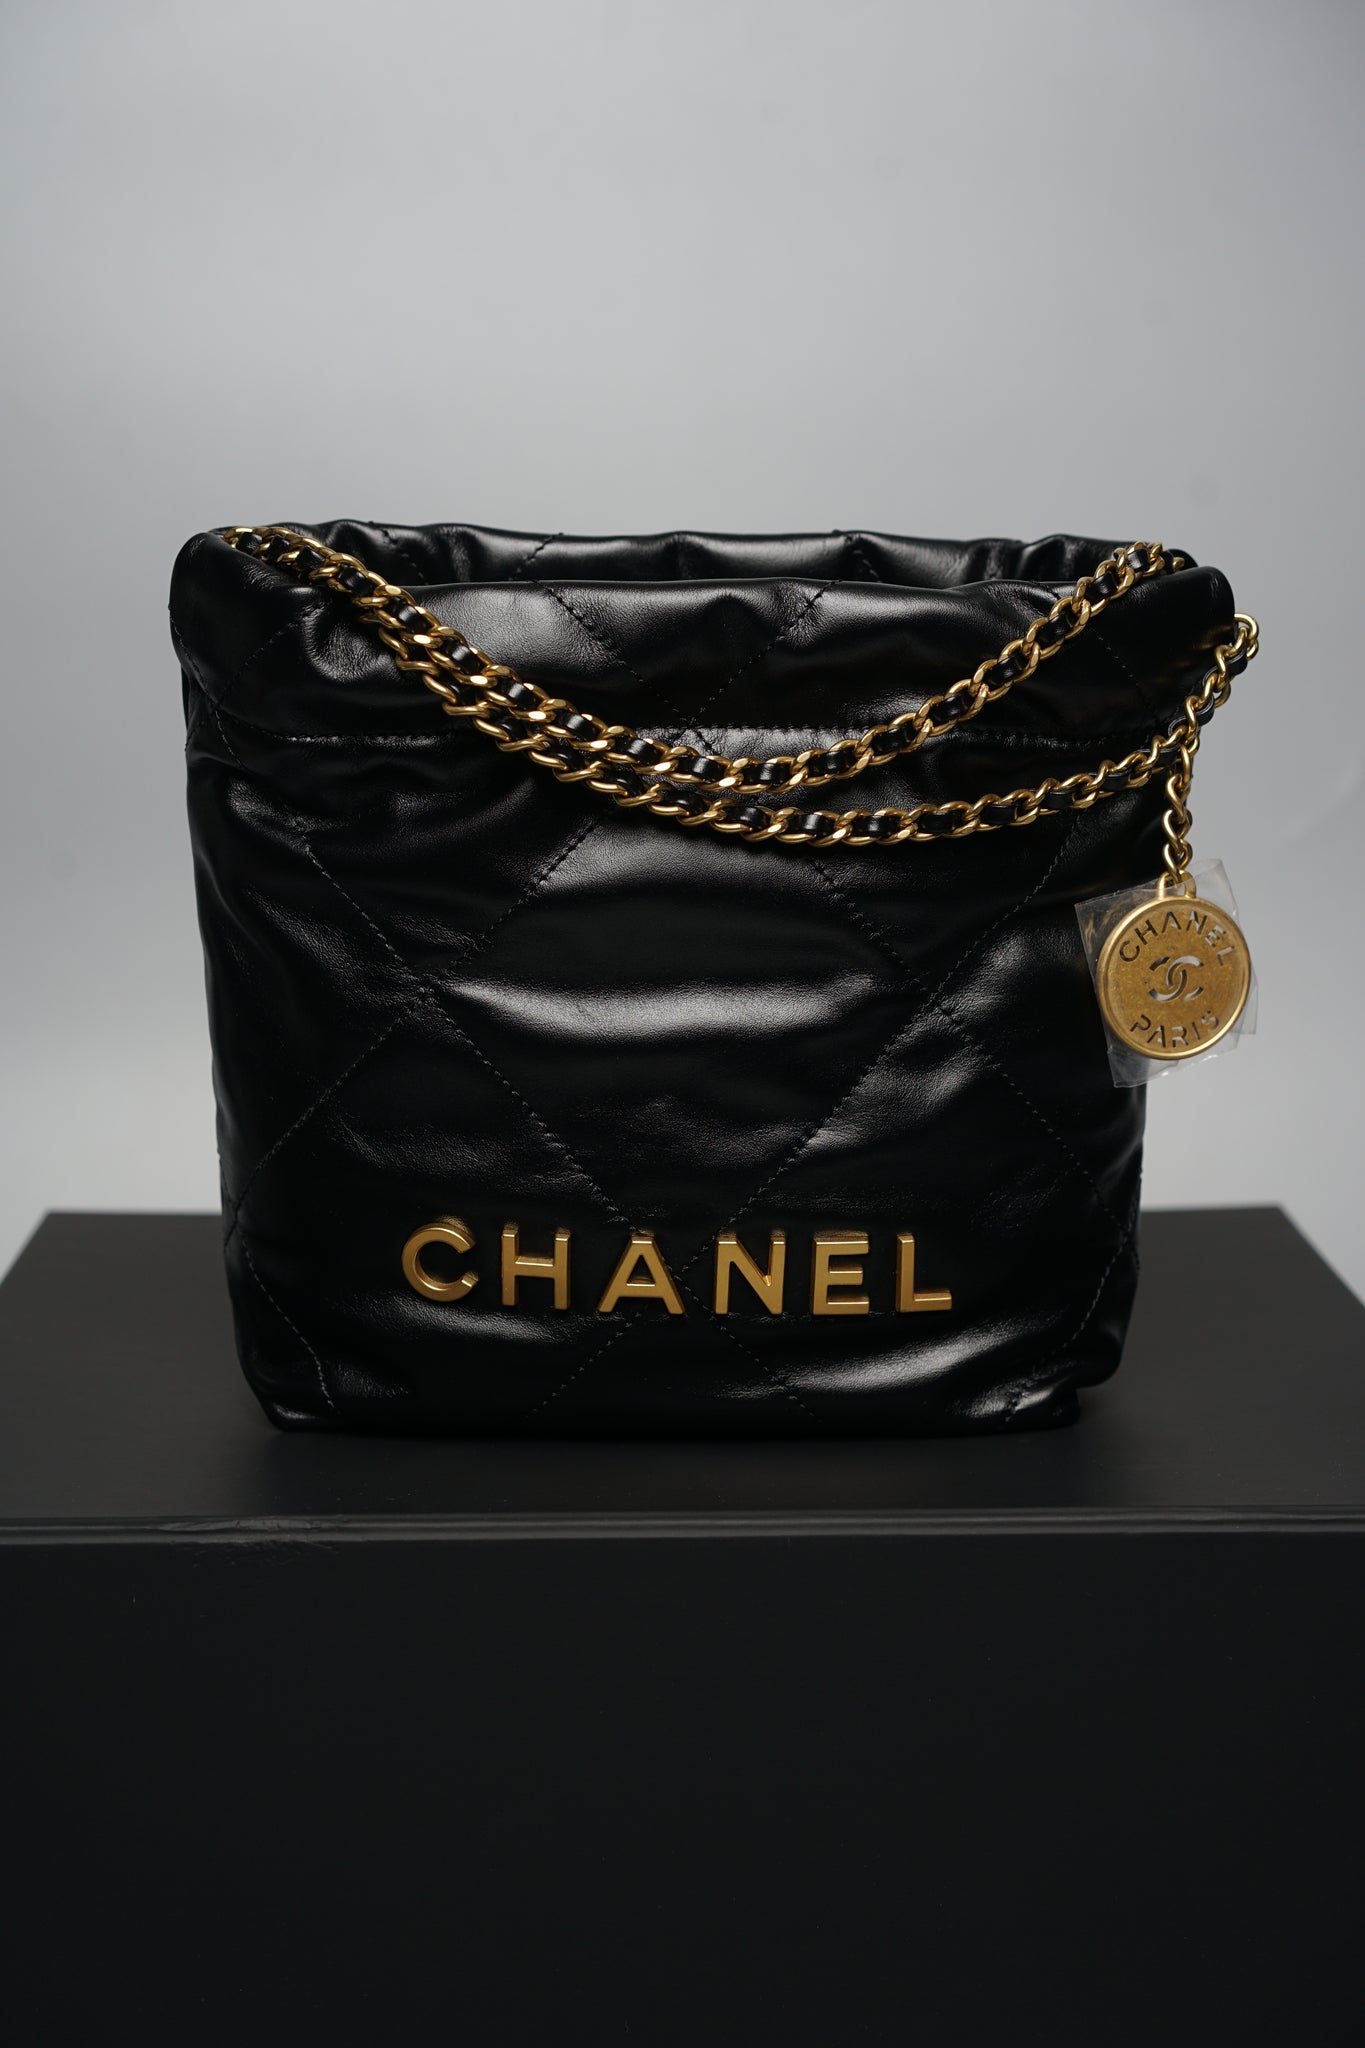 Chanel 22 Mini in Black Calfskin Bghw (Brand New)